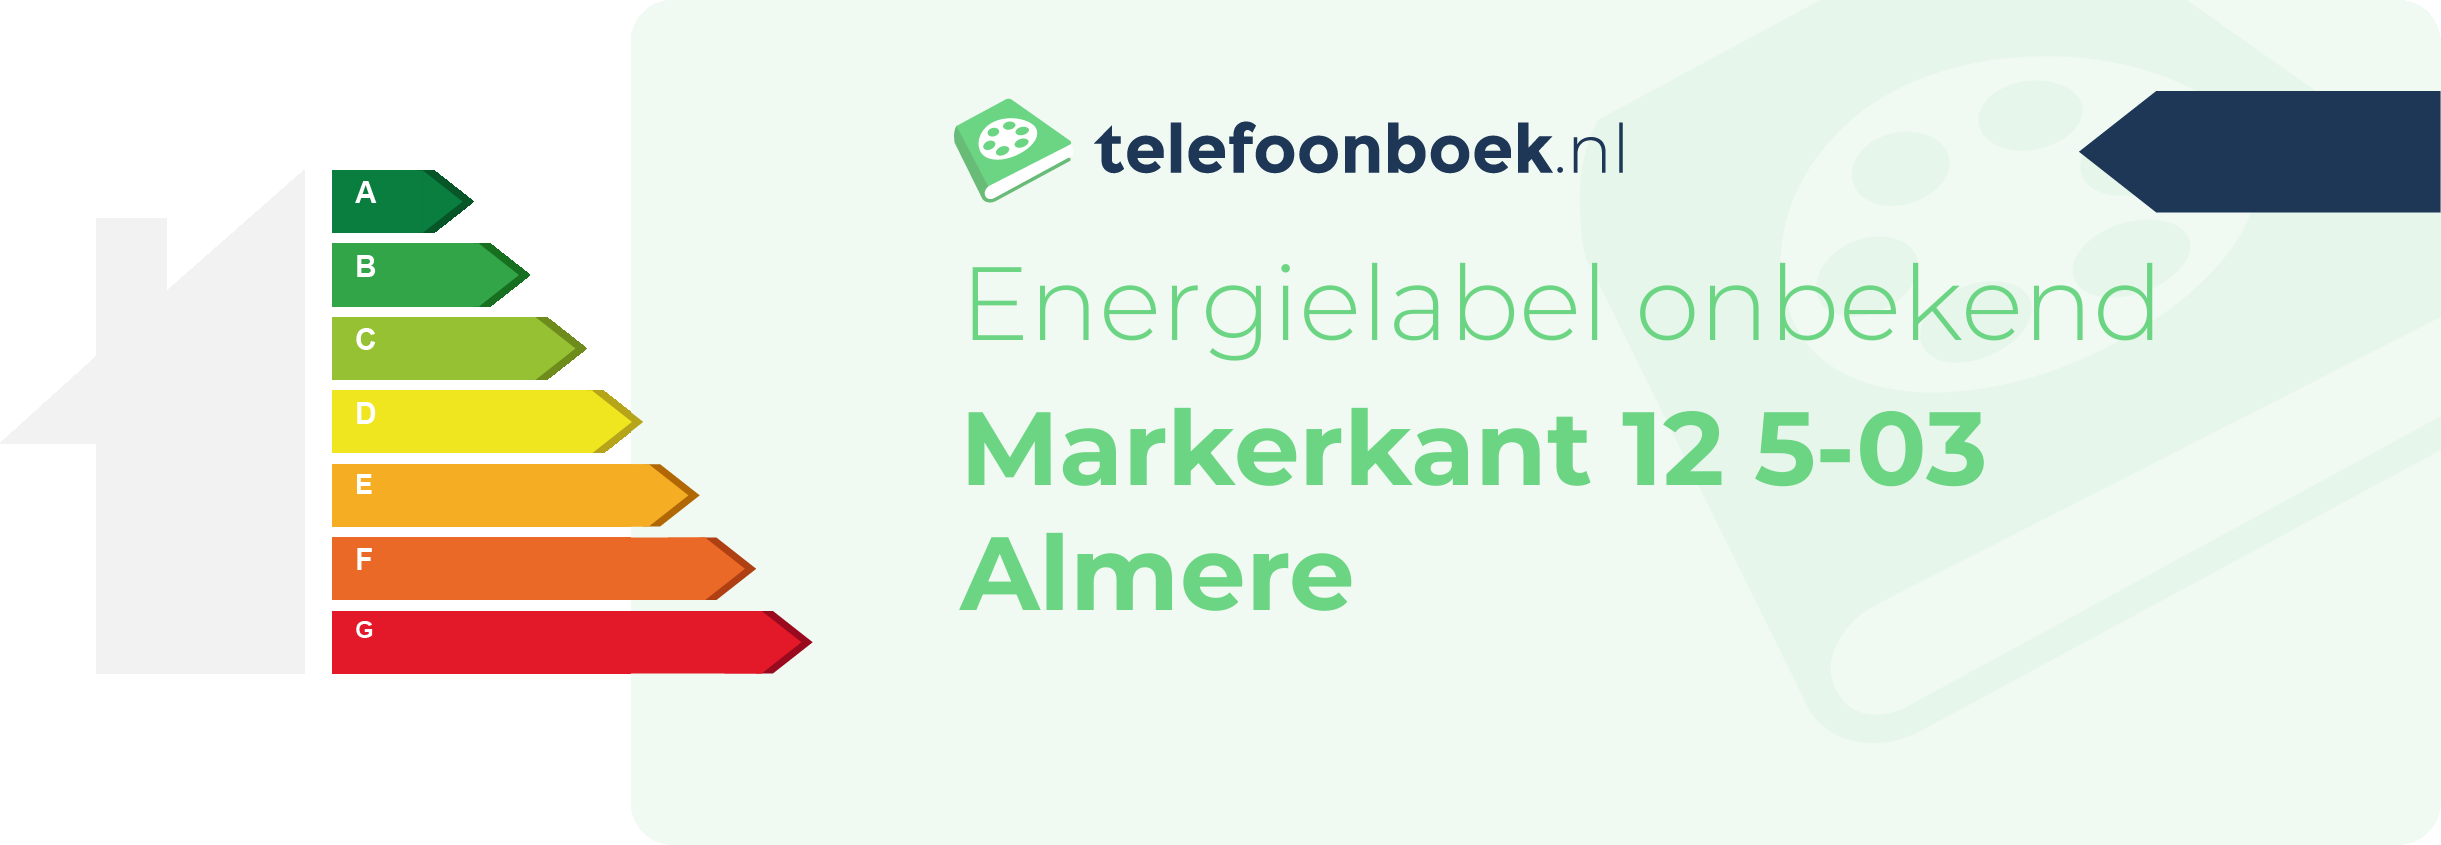 Energielabel Markerkant 12 5-03 Almere